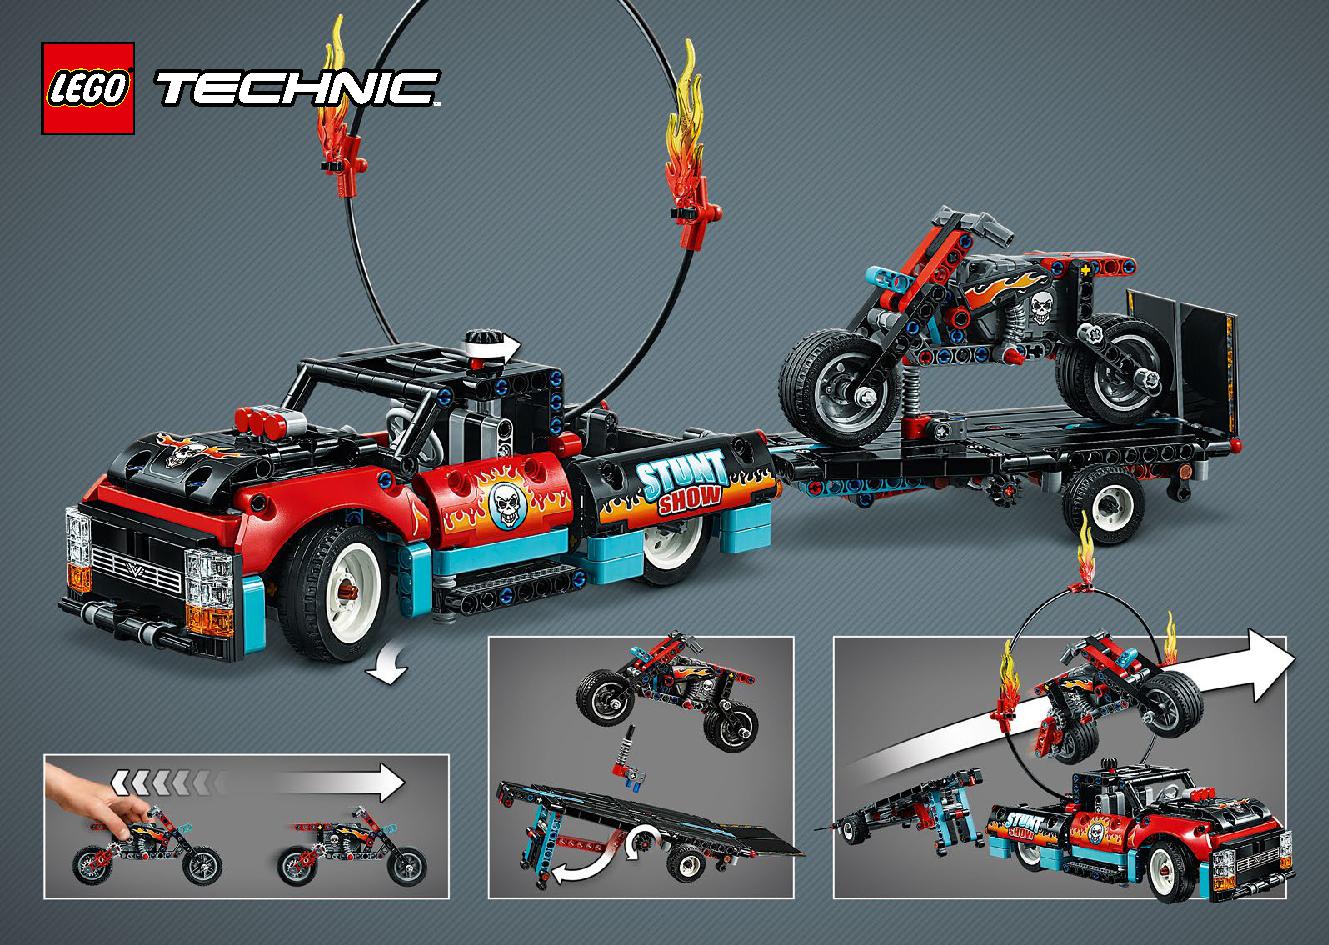 Stunt Show Truck & Bike 42106 LEGO information LEGO instructions 116 page